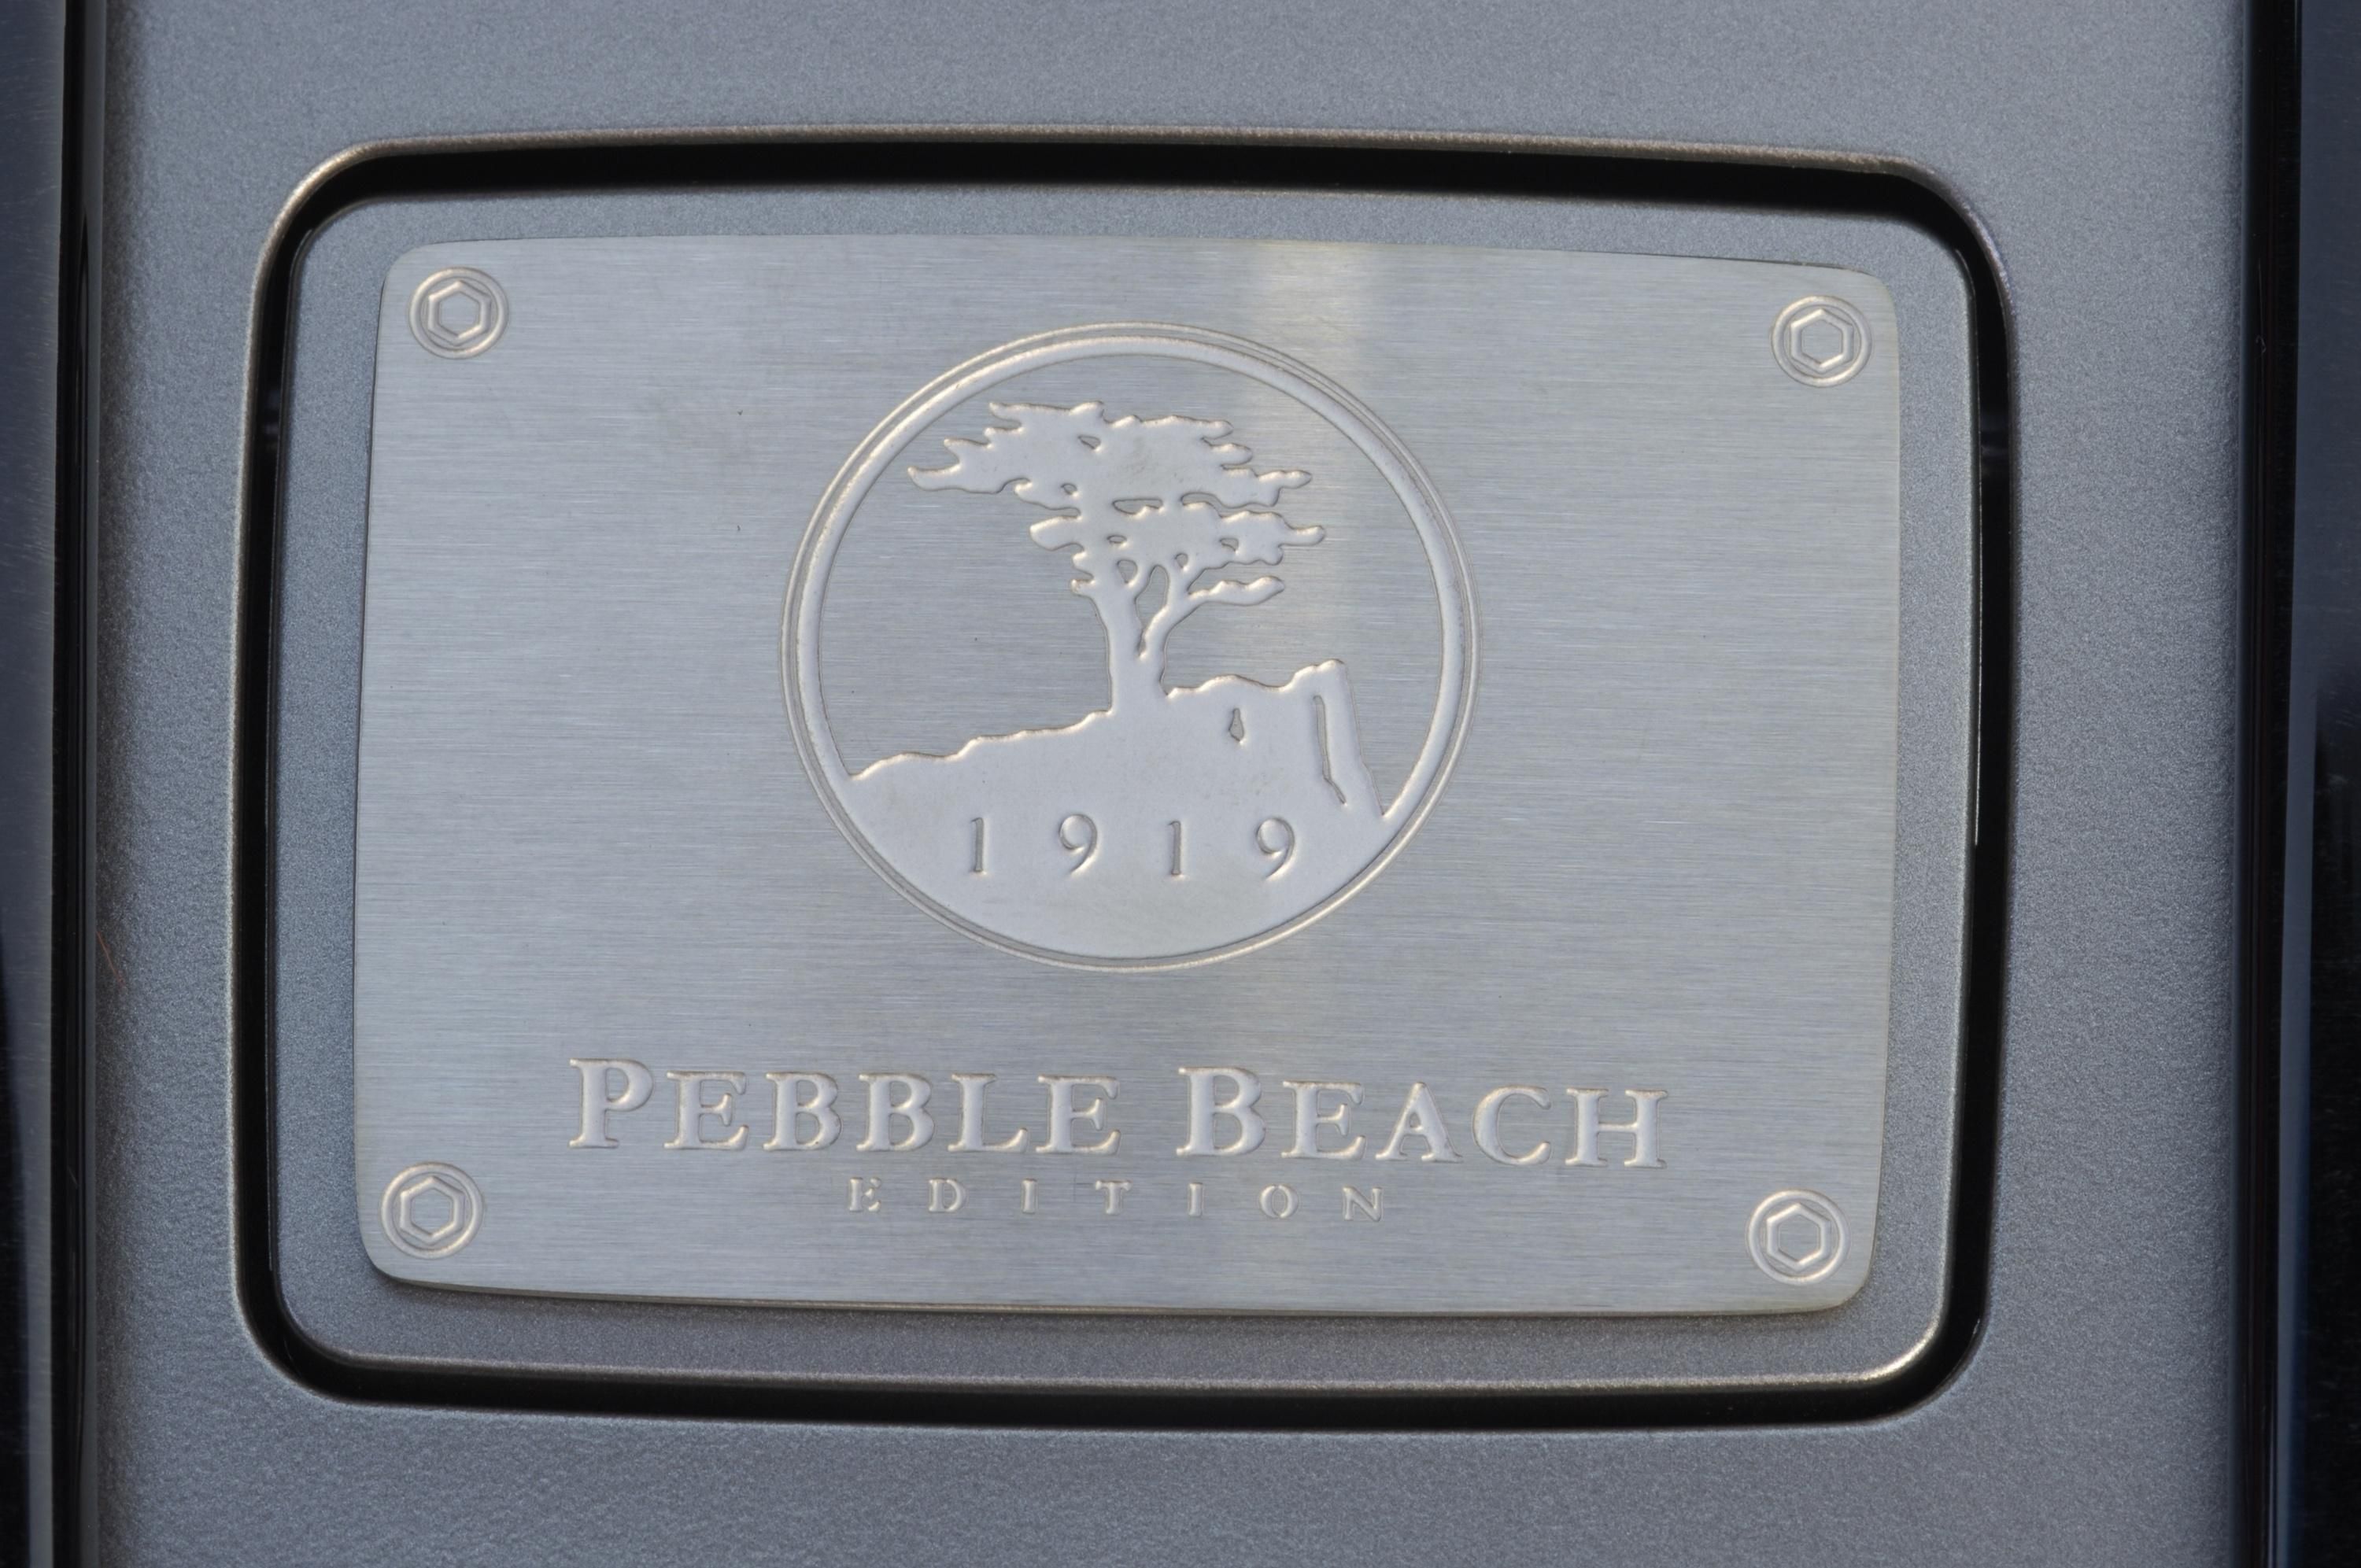 2008 Lexus SC 430 Pebble Beach Edition